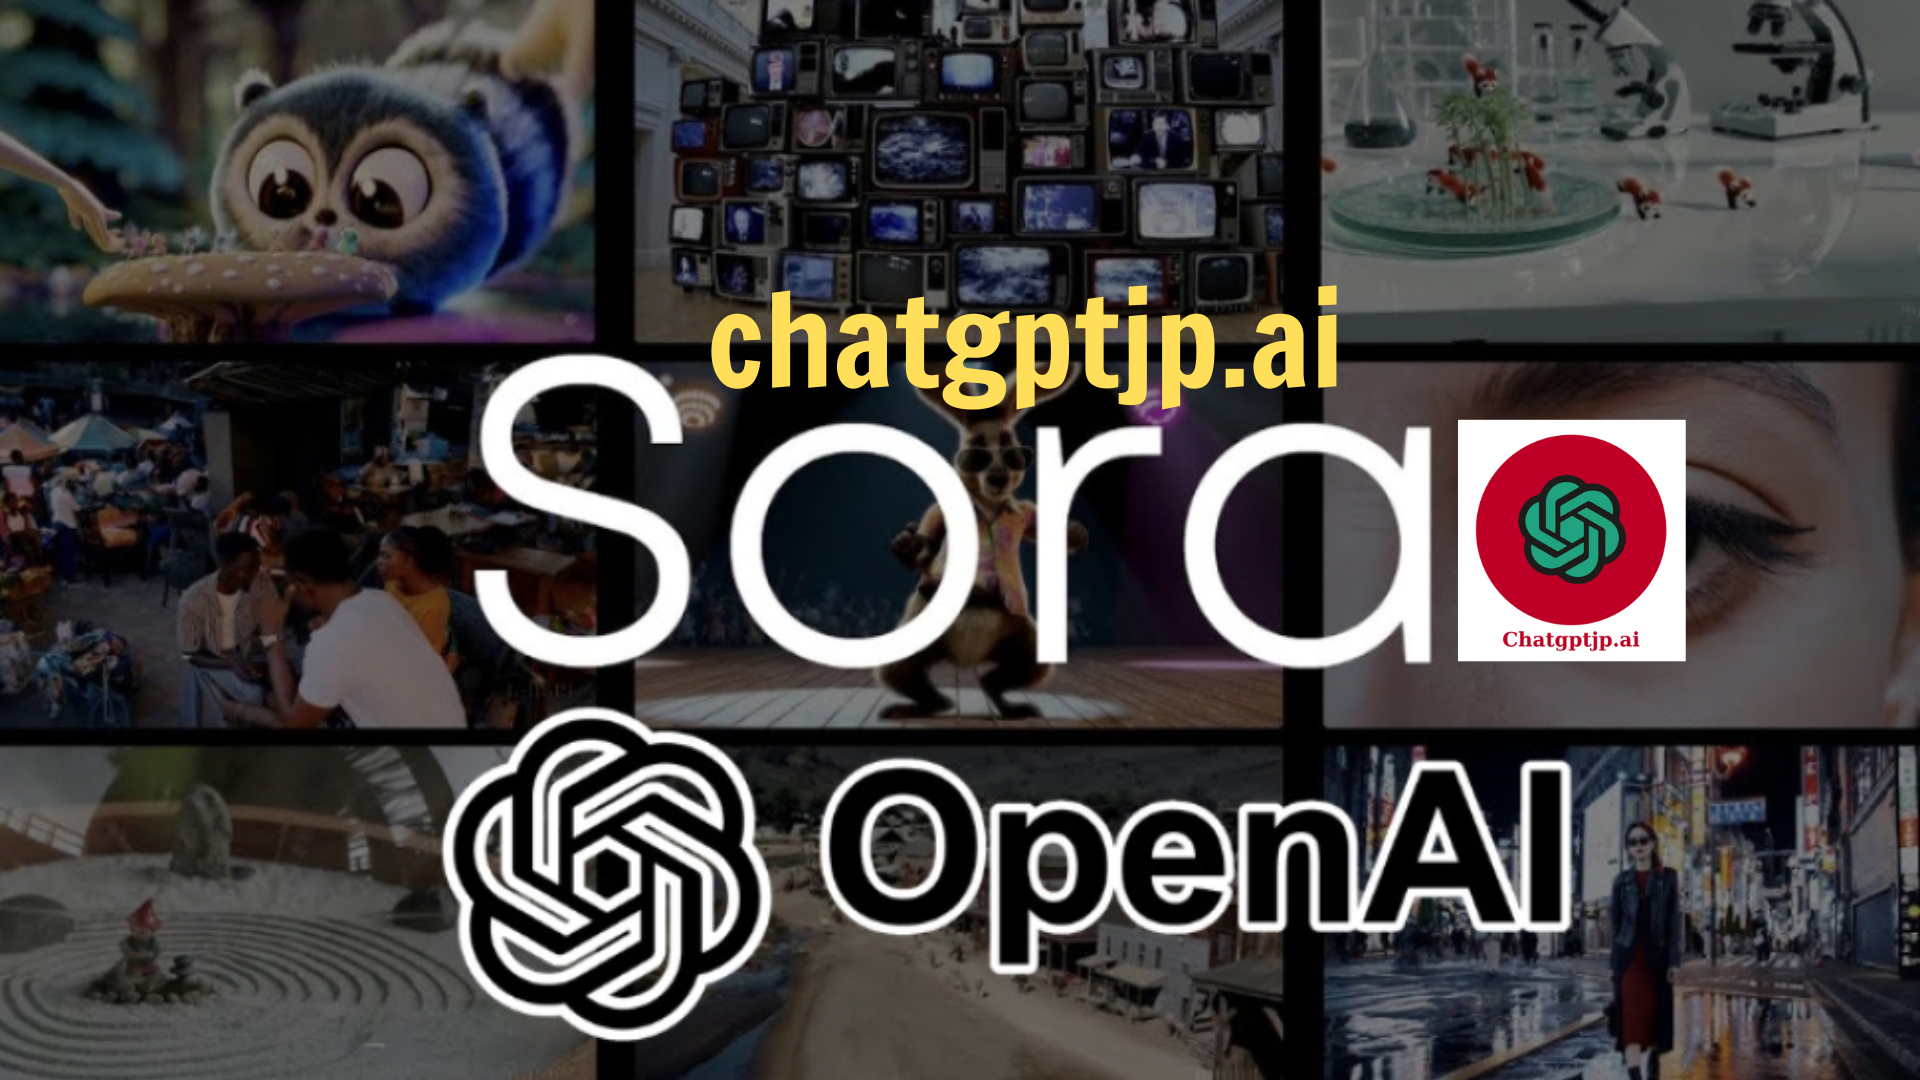 OpenAIは、AIベースのVideogener Soraを発表します